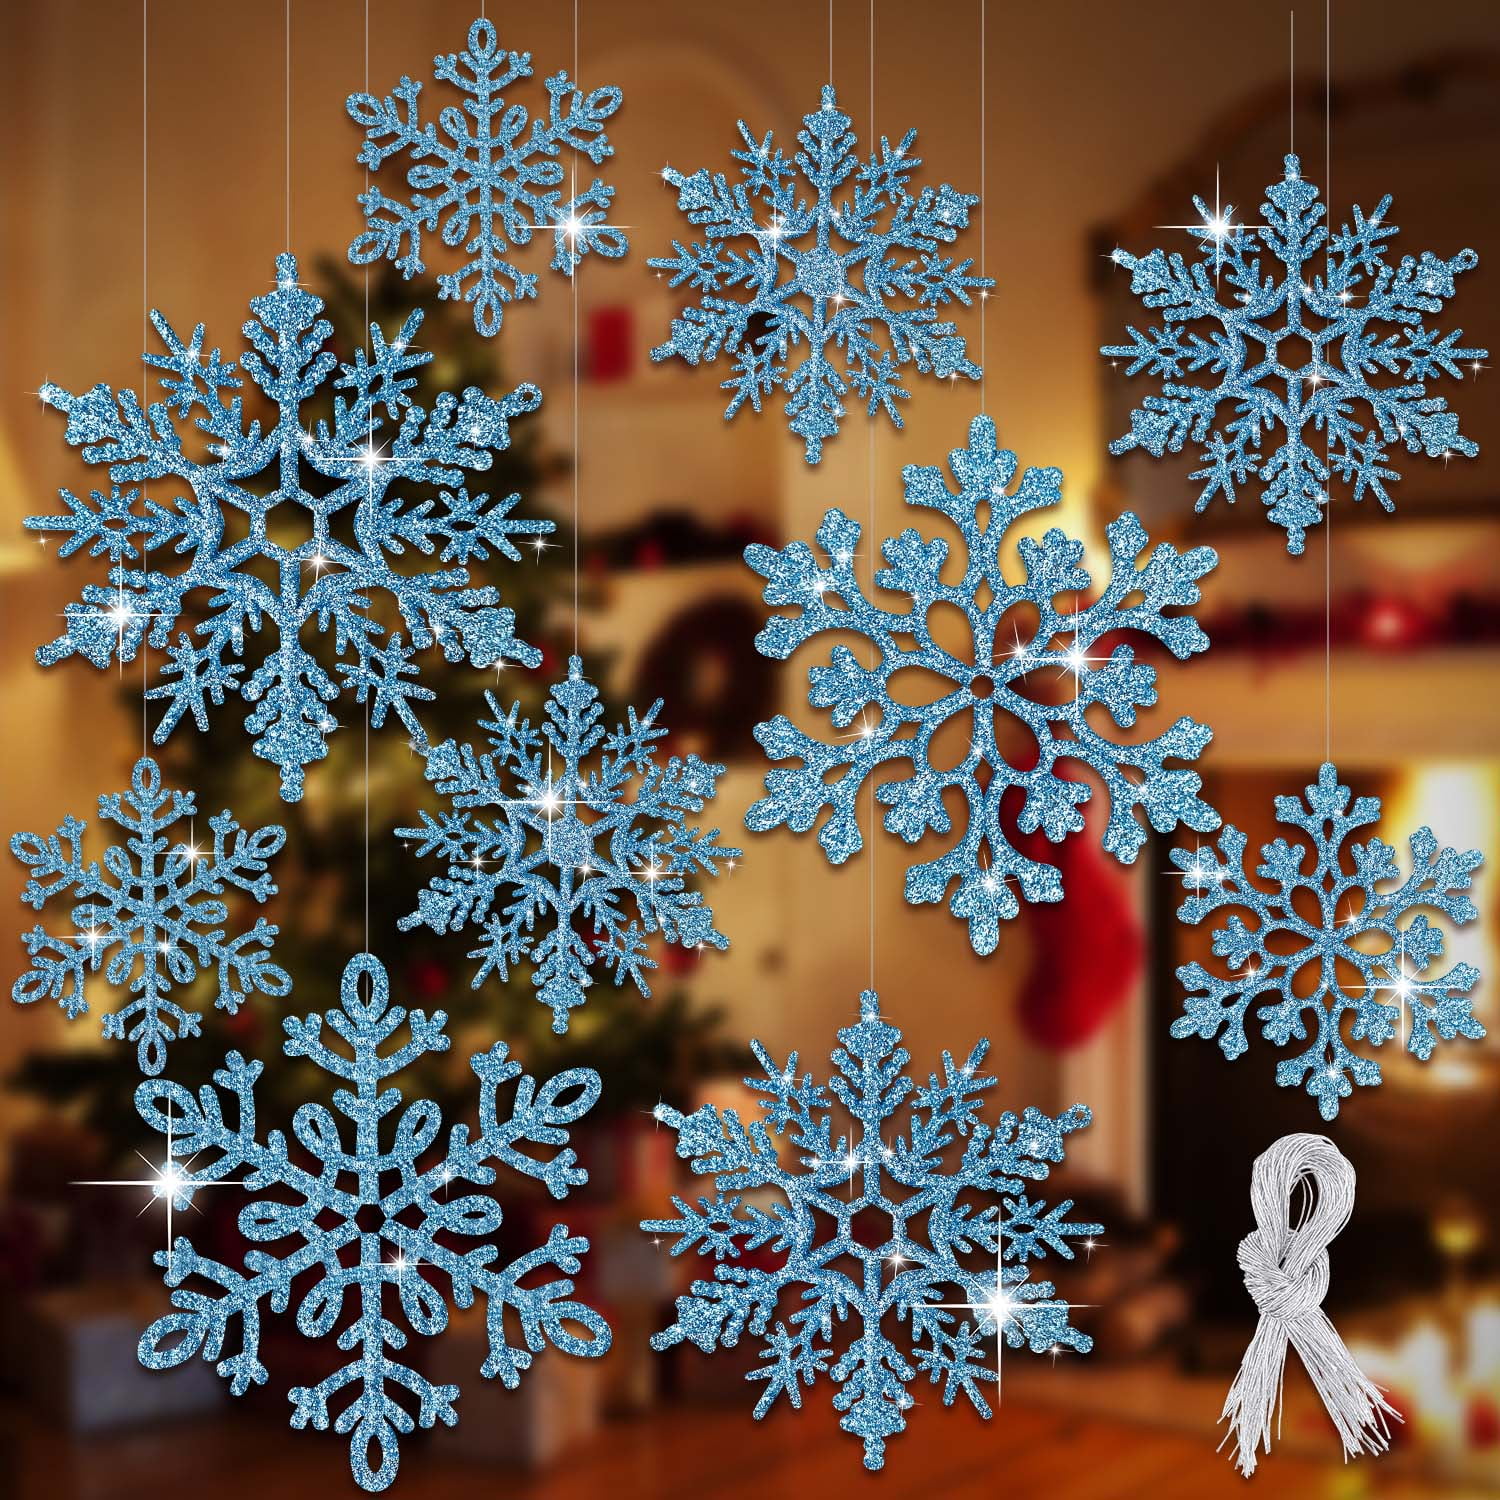 D-GROEE 1 Set Snowflakes Outdoor Christmas Ornaments Foam Snowflakes  Decorations Christmas Ornaments Snowflake Window Hanging Decorations 